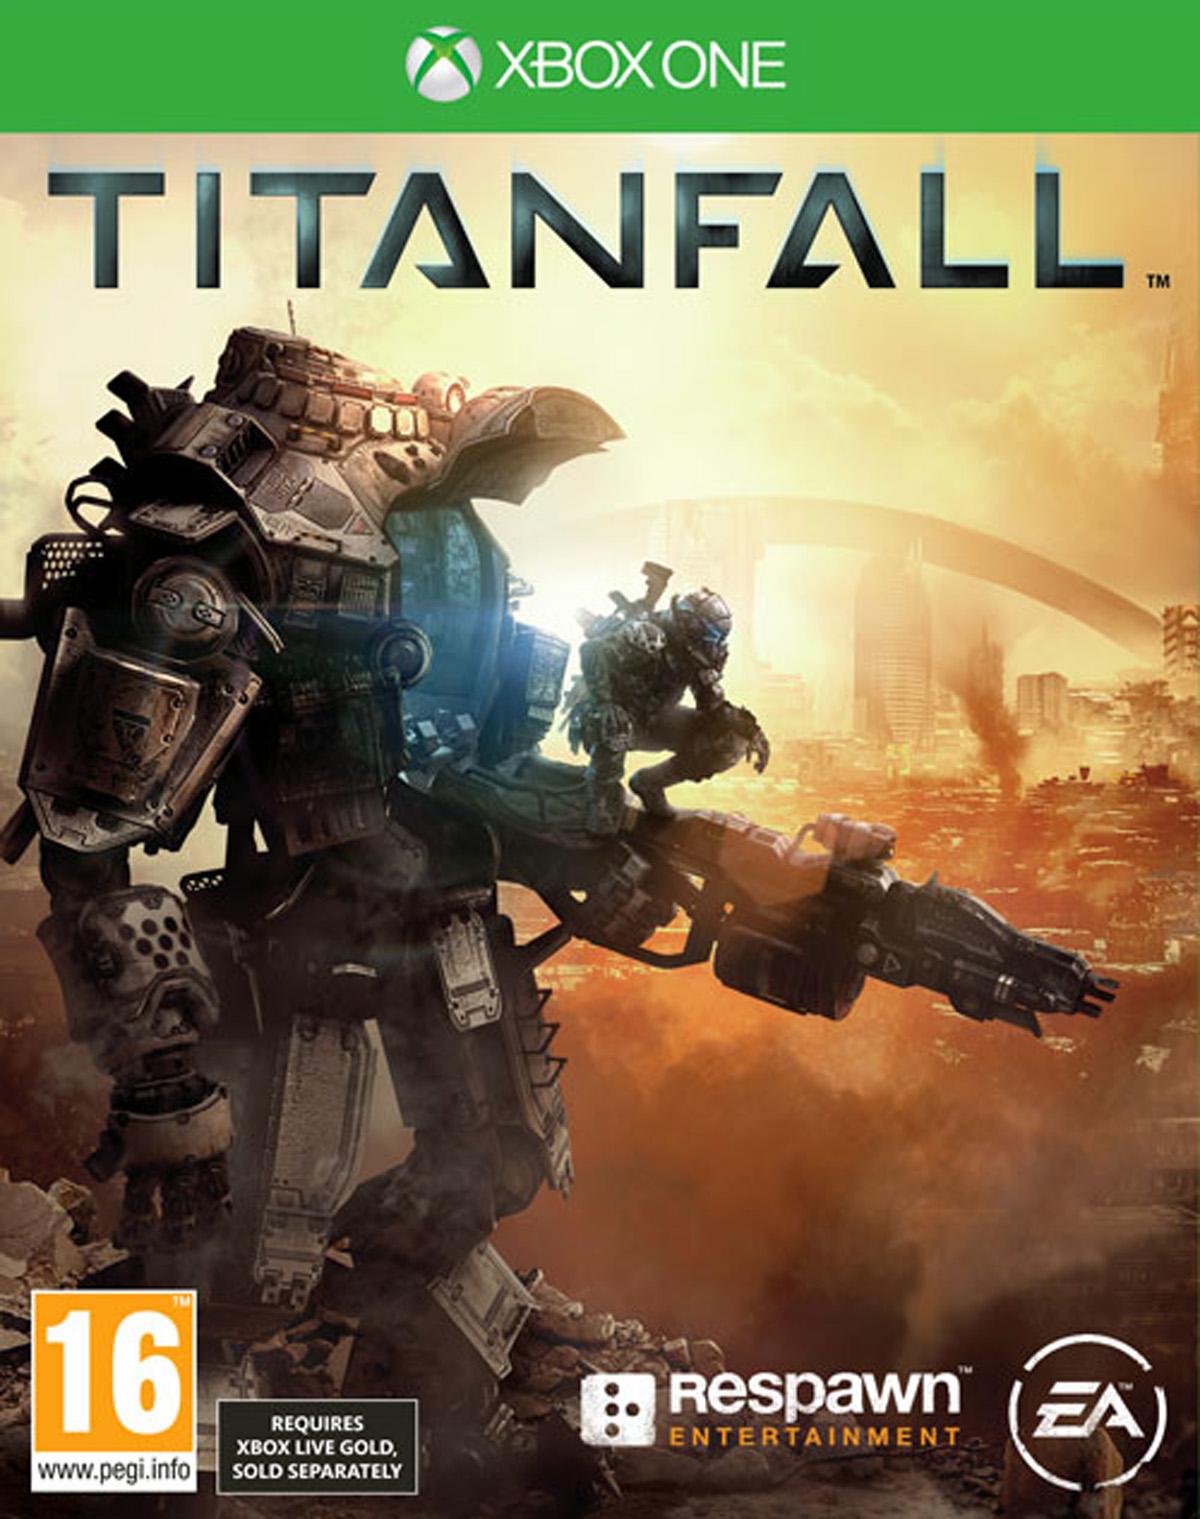 Titanfall 2 Review: The Iron Giant